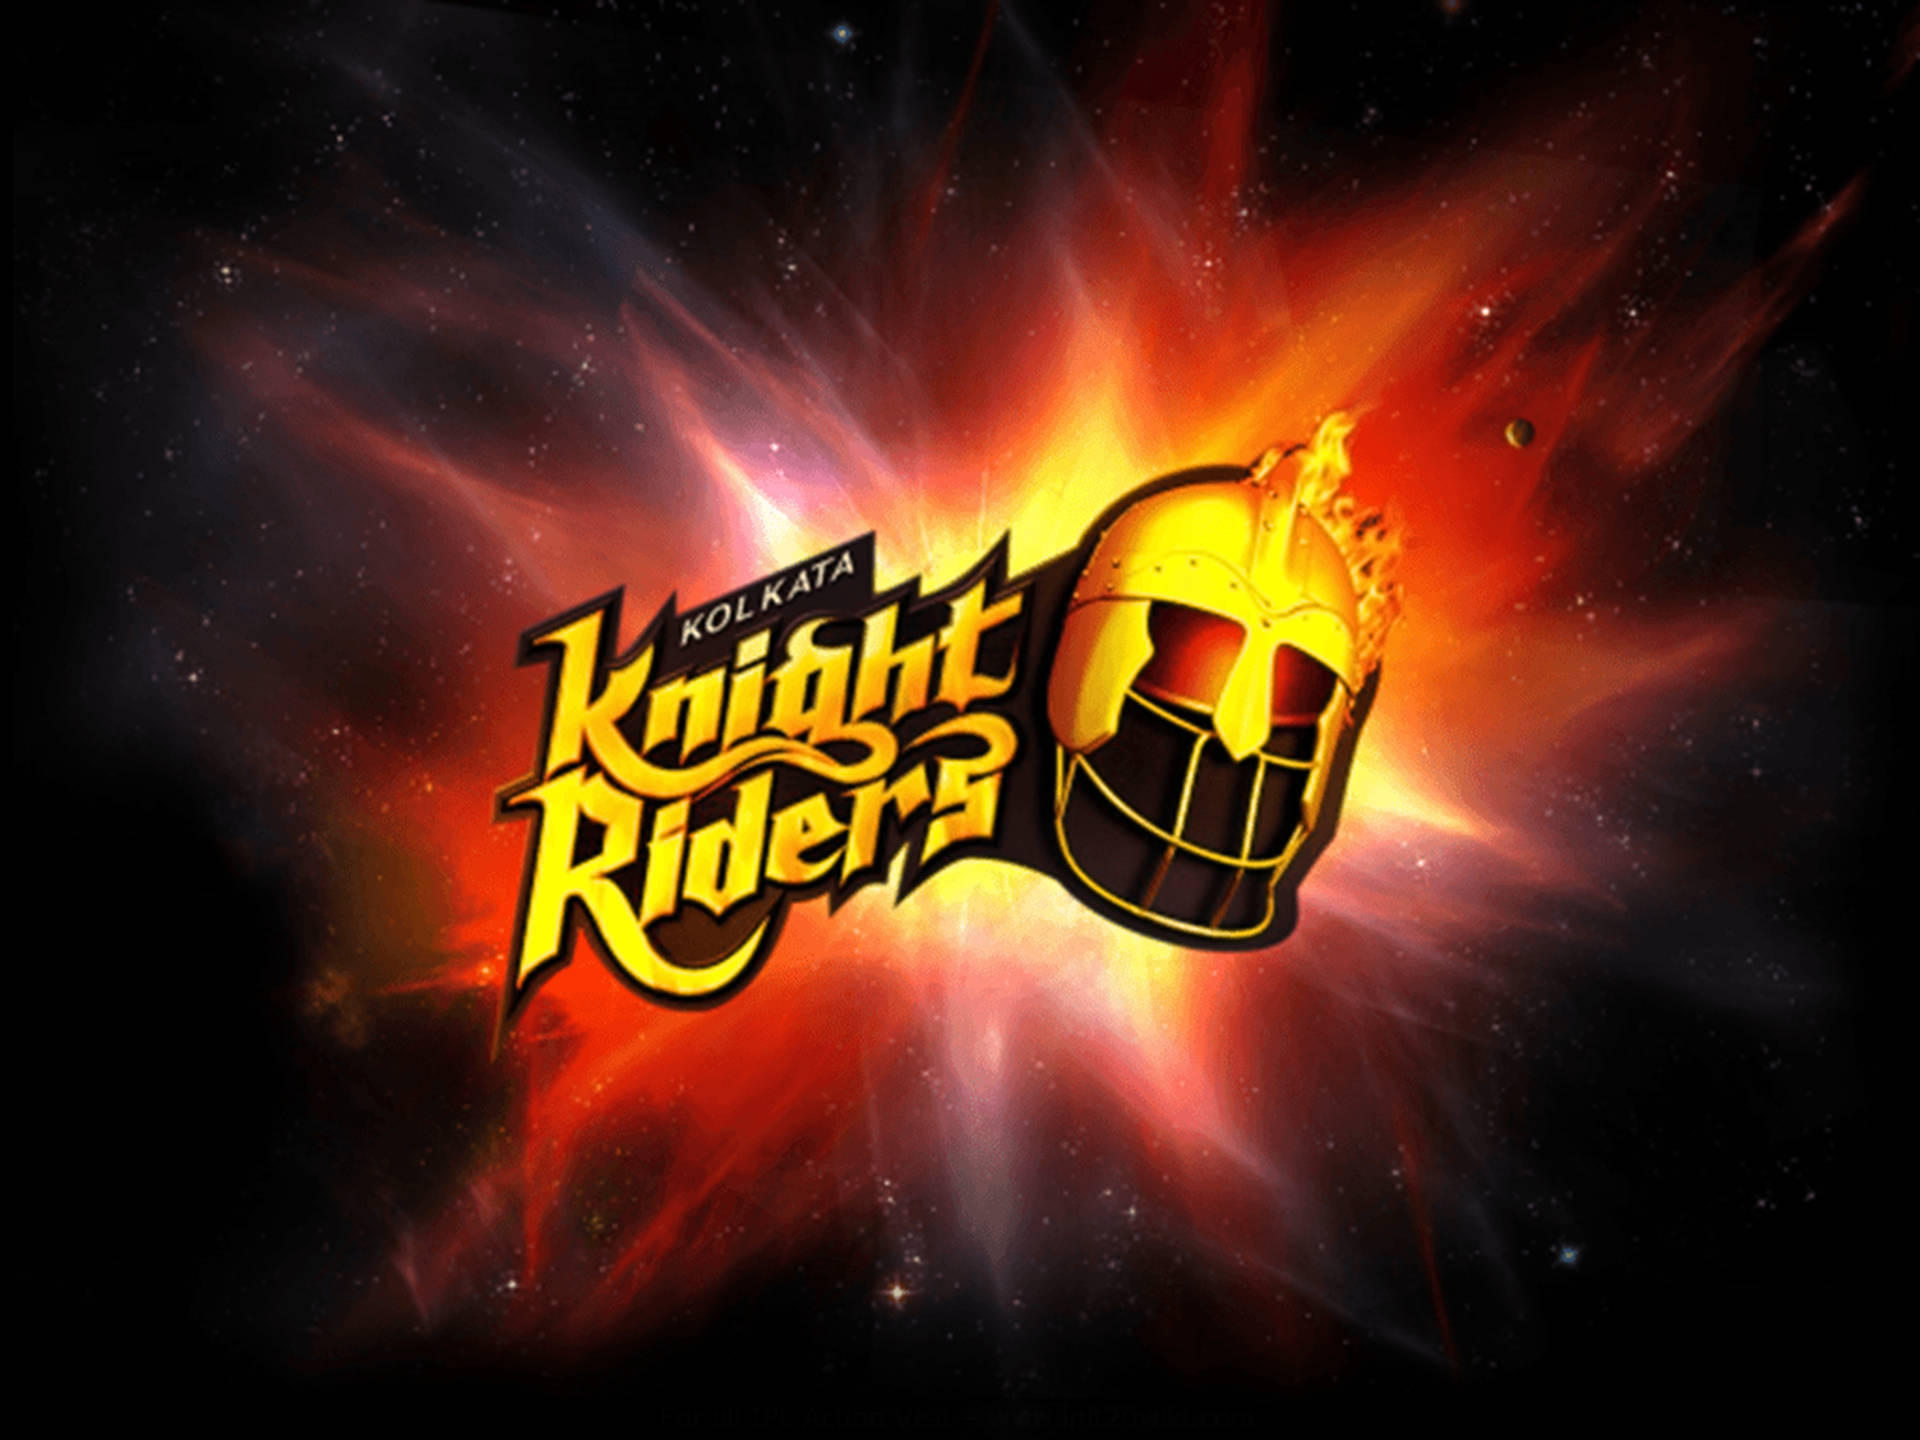 Kolkata Knight Riders Red Galaxy Background